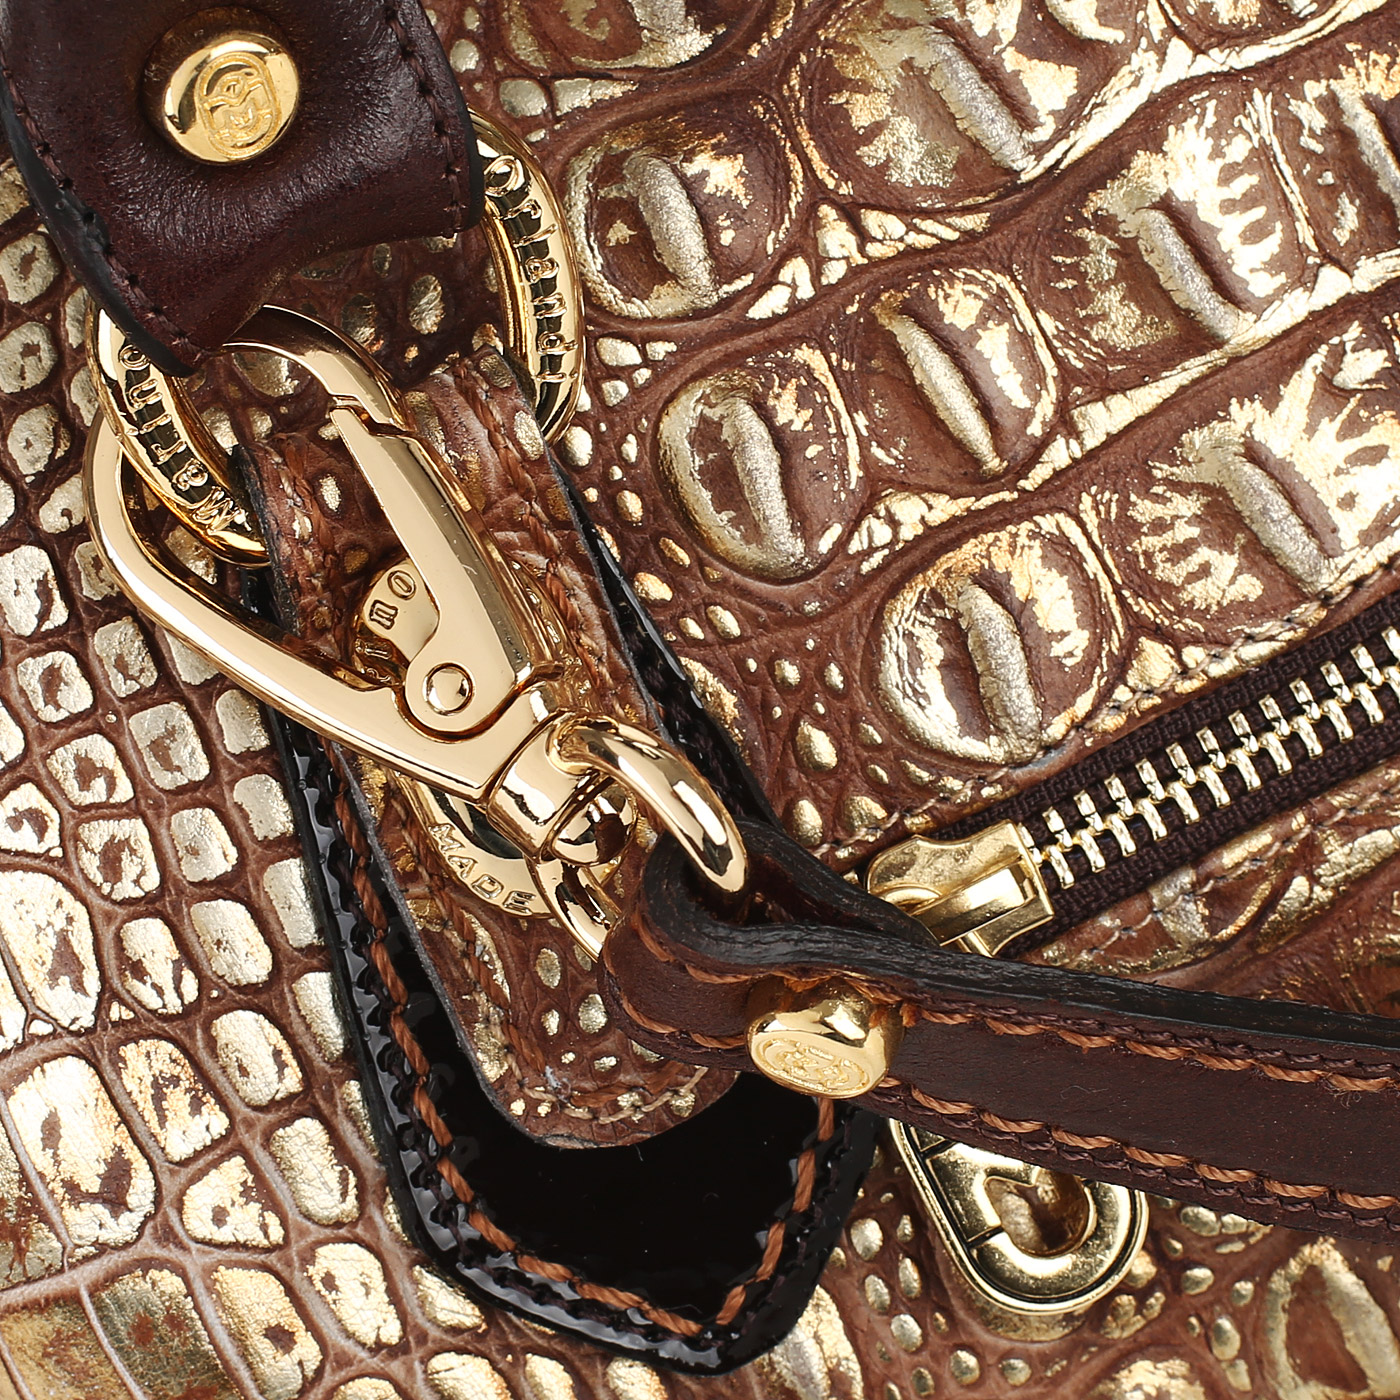 Кожаная сумка с плечевым ремешком Marino Orlandi 